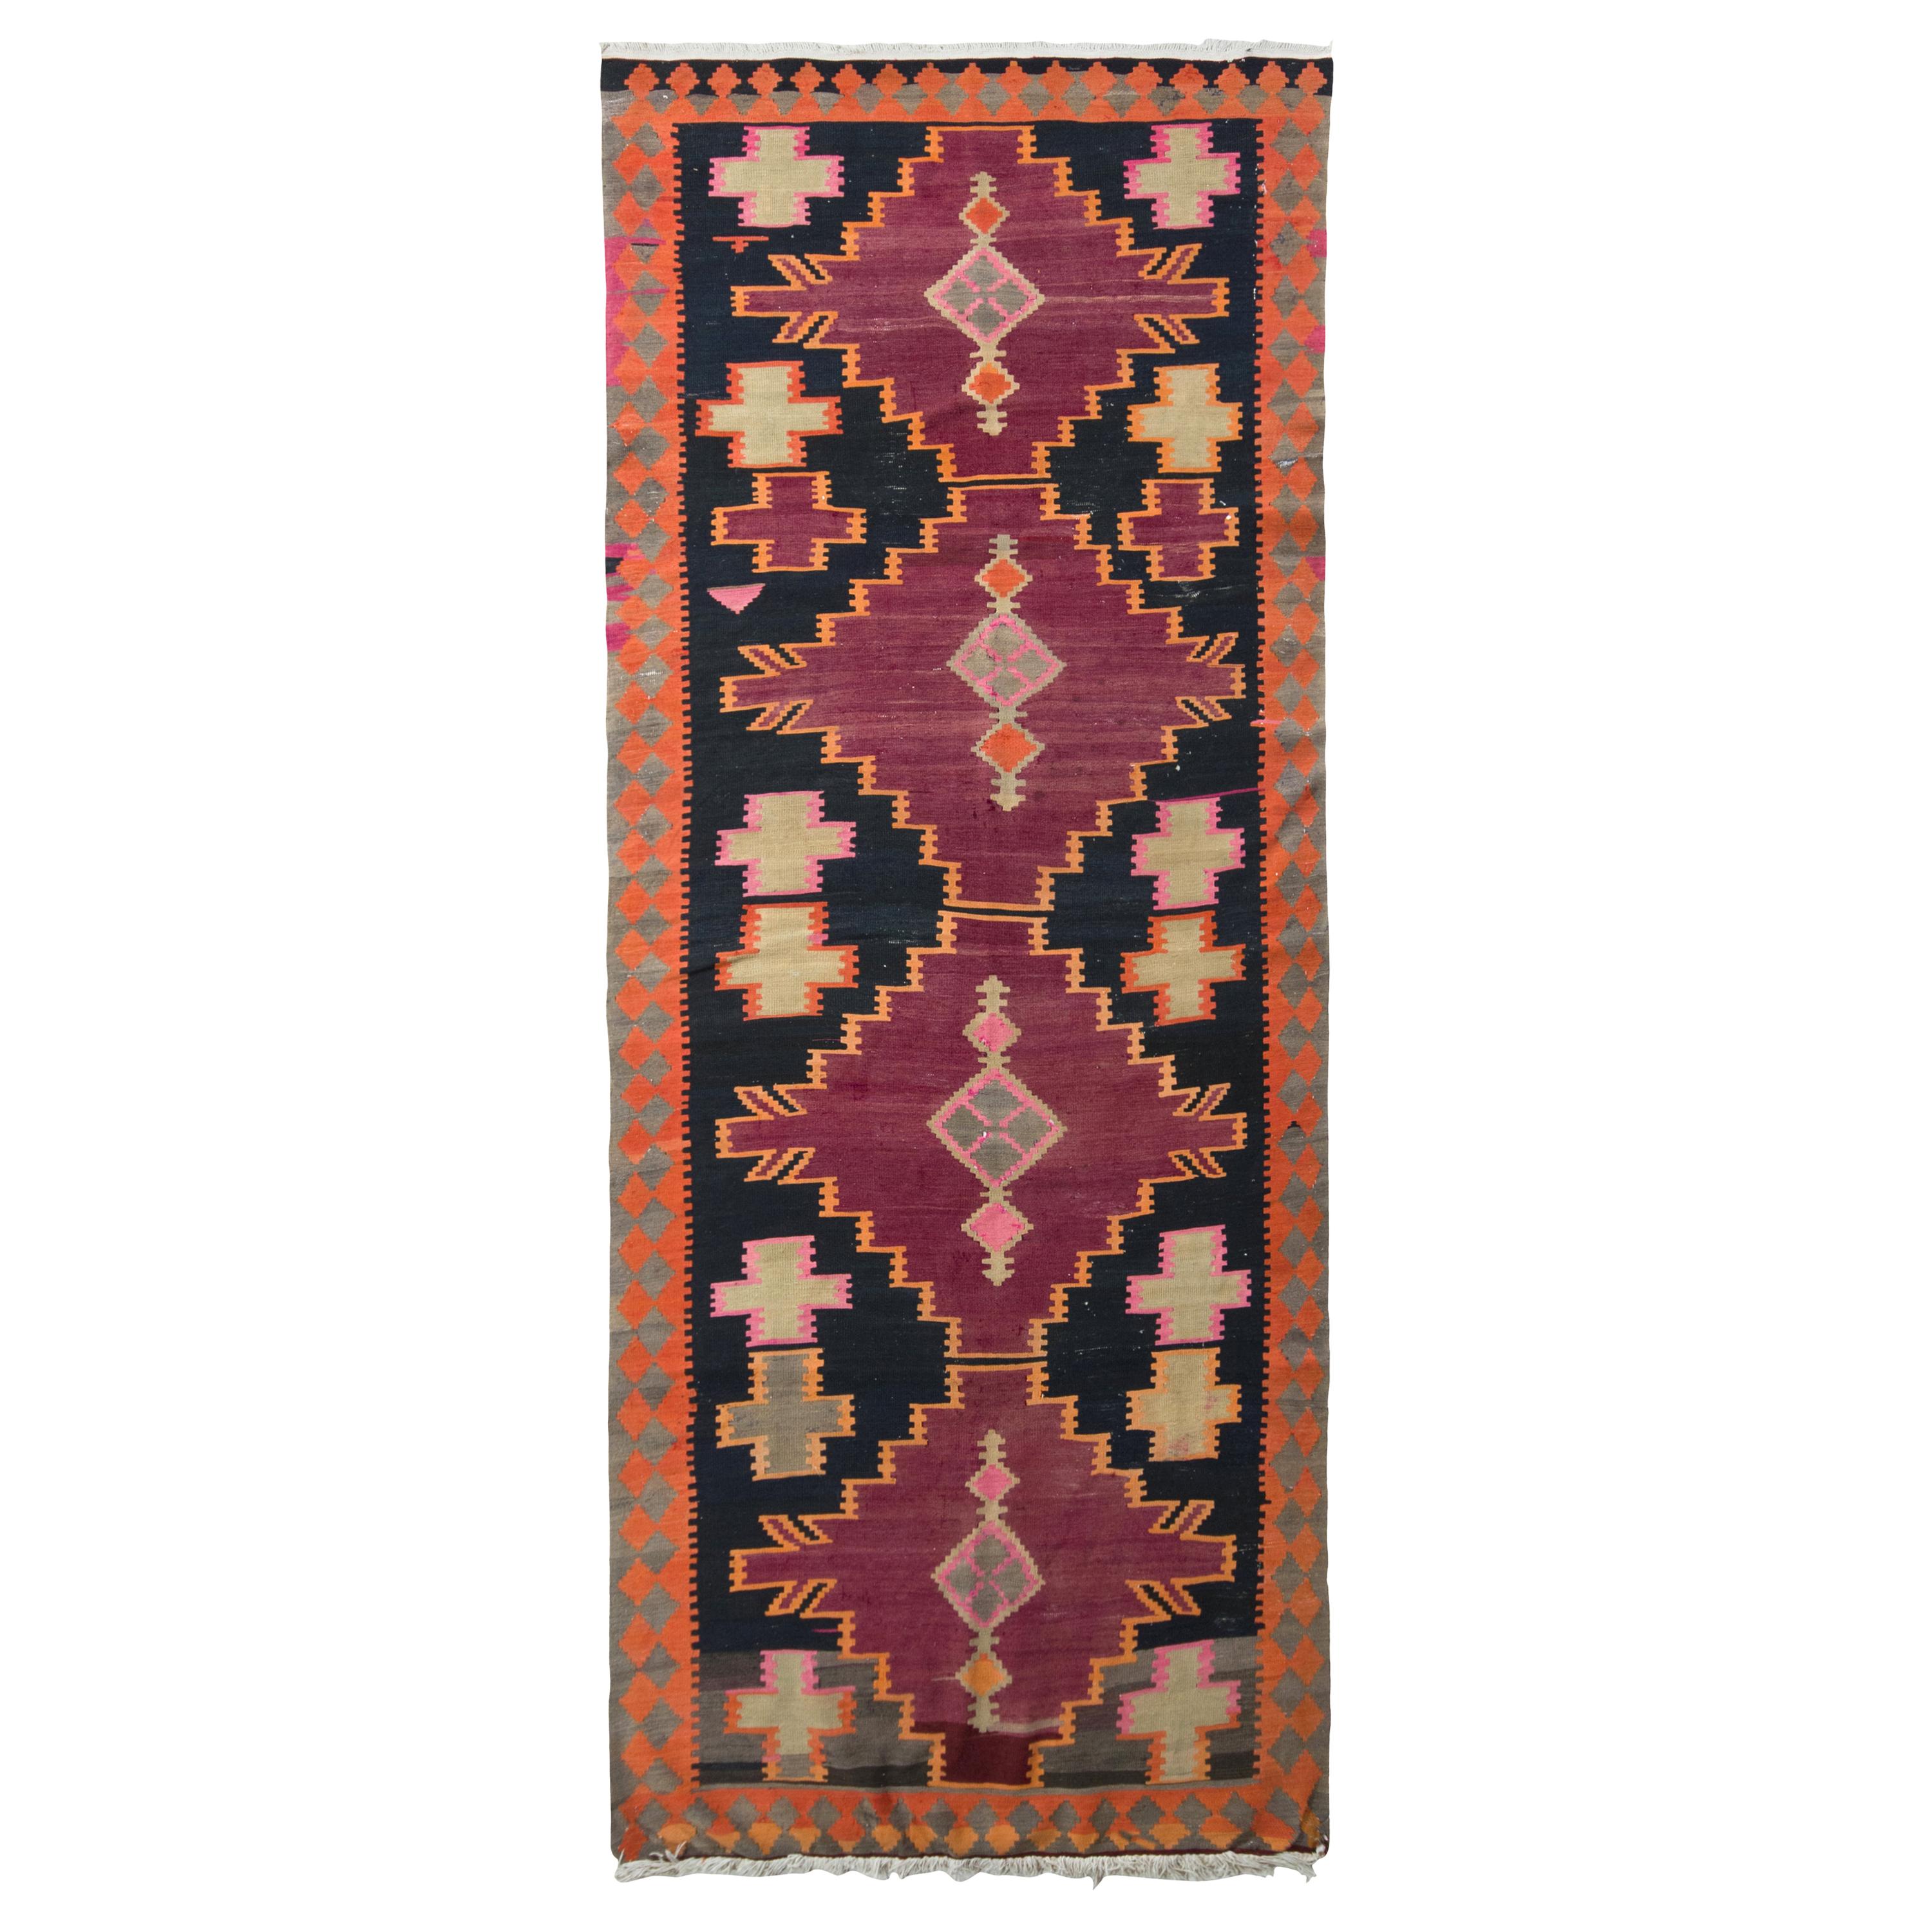 Handwoven Antique Kilim Rug in Black and Orange Geometric Pattern by Rug & Kilim